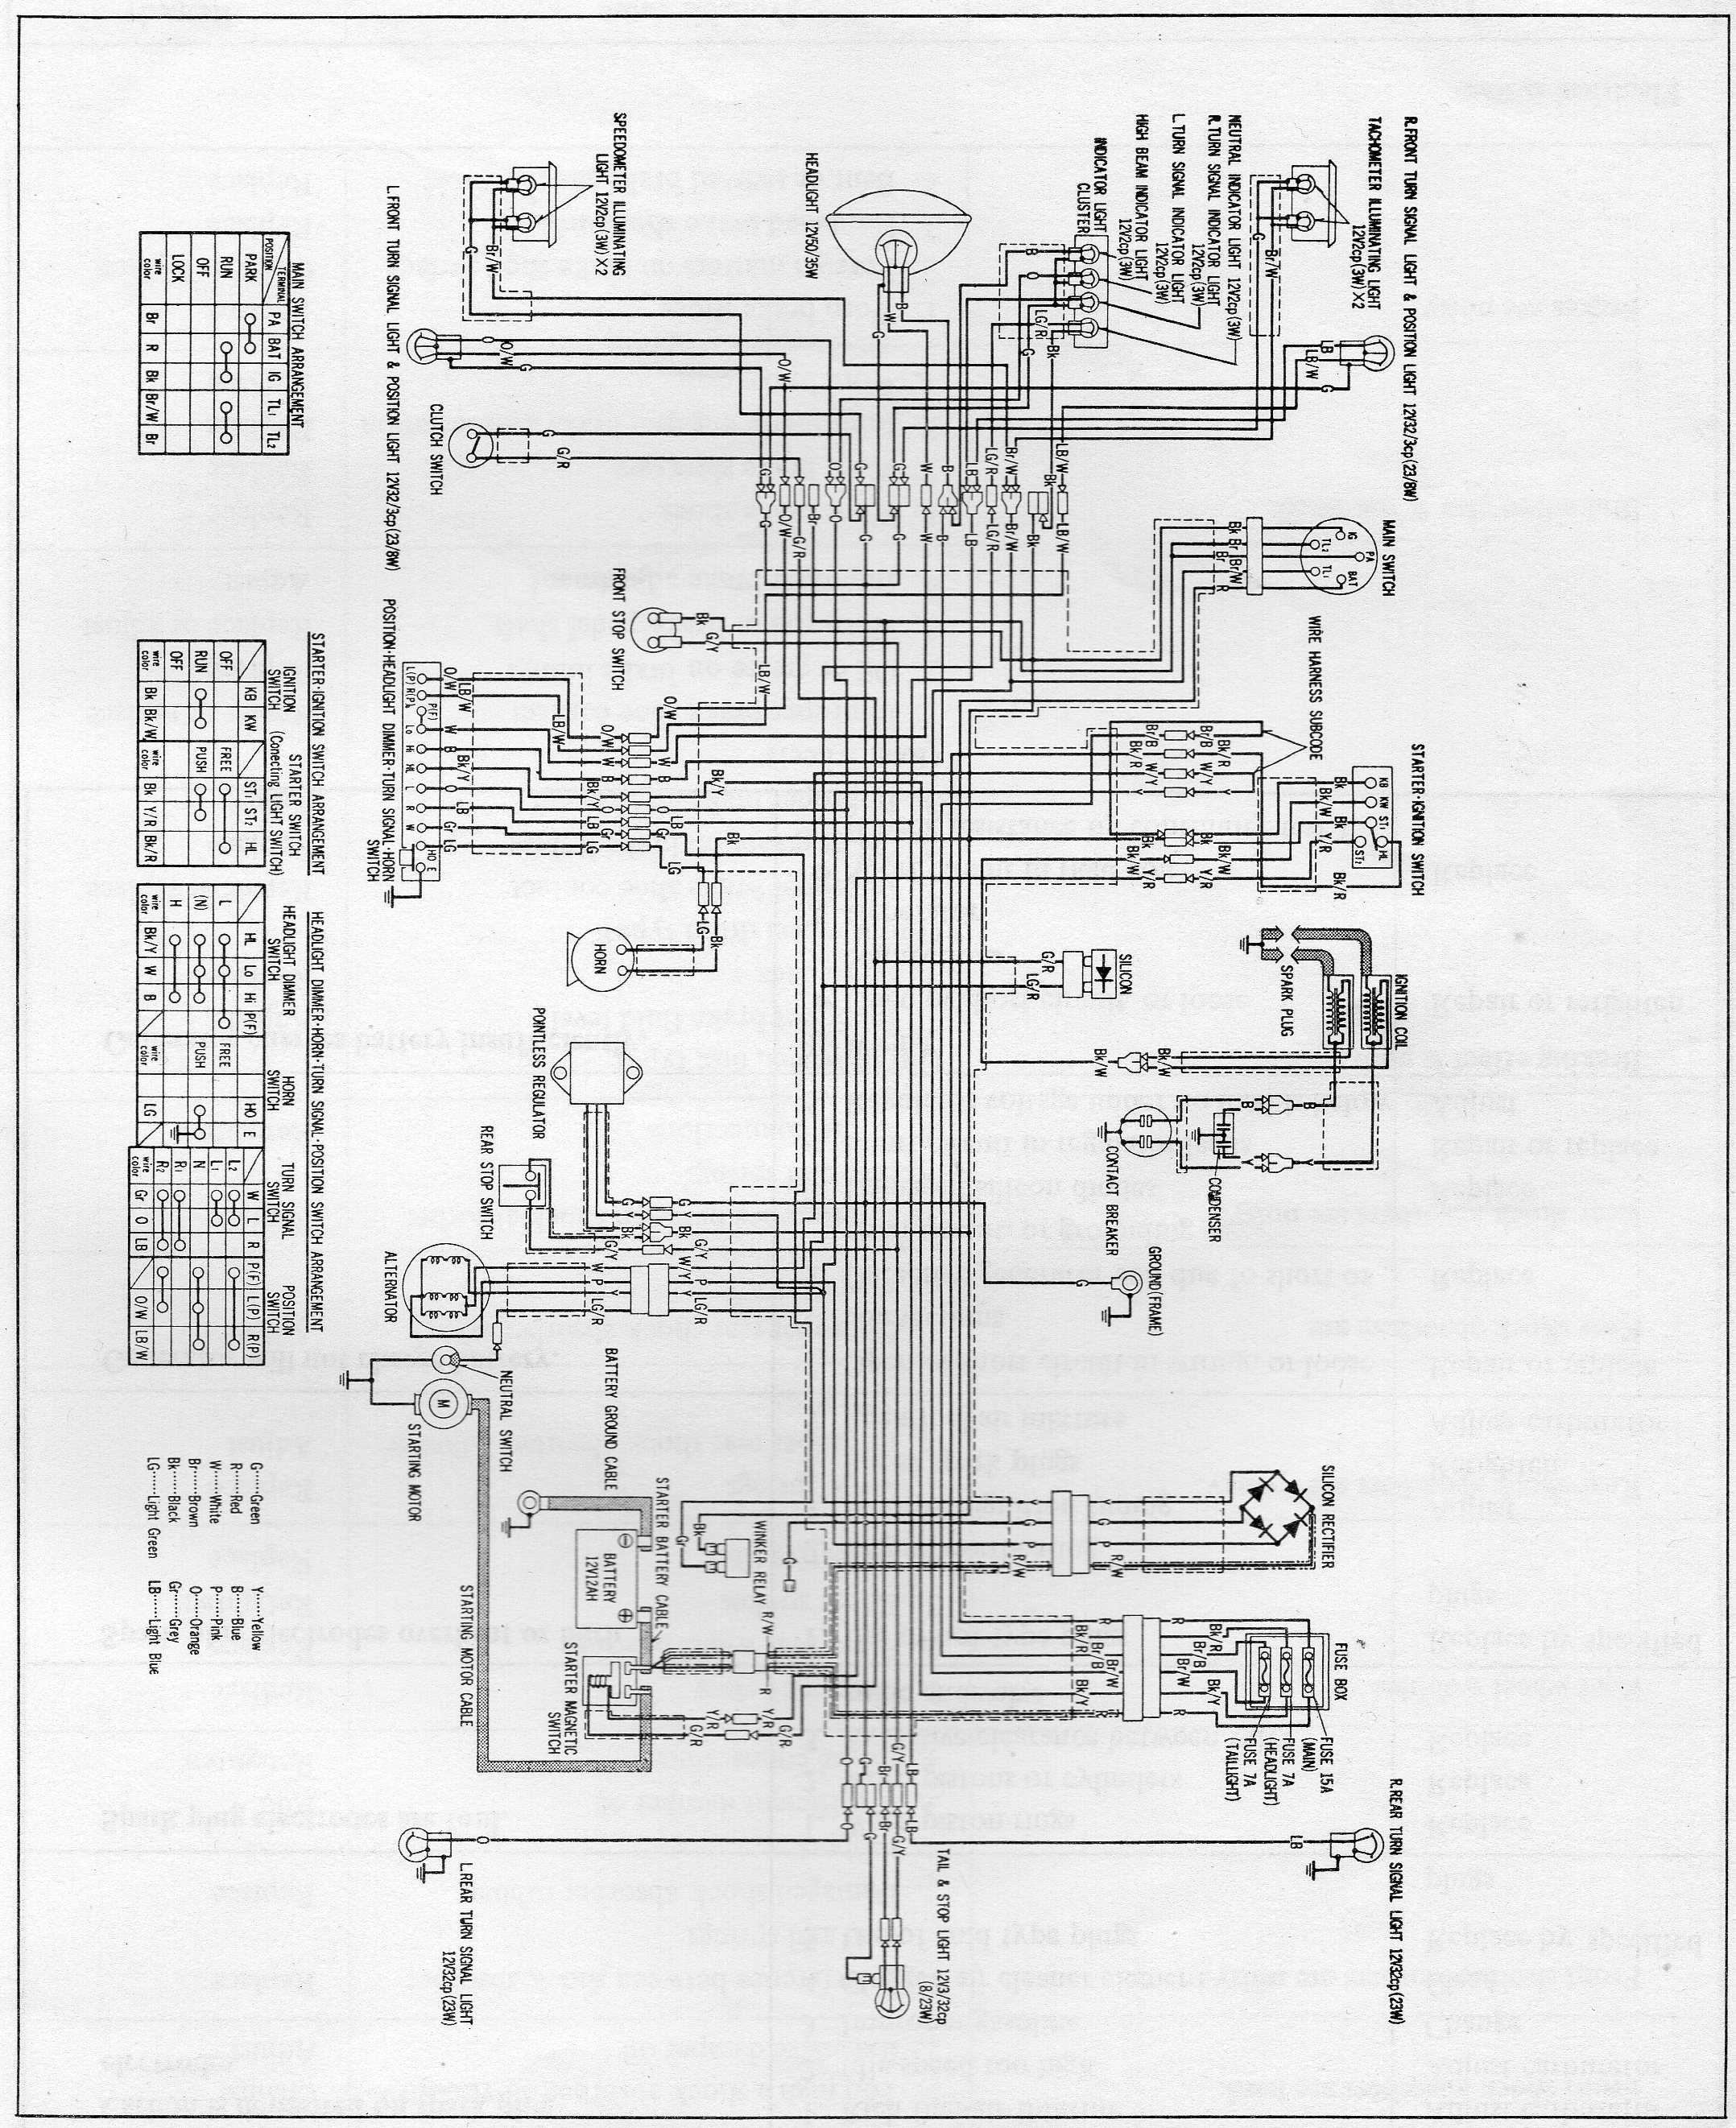 Engine Wiring Diagram 1986 Monte 305 Switch to Schematic Wiring Diagrams Full Hd Version Wiring Of Engine Wiring Diagram 1986 Monte 305